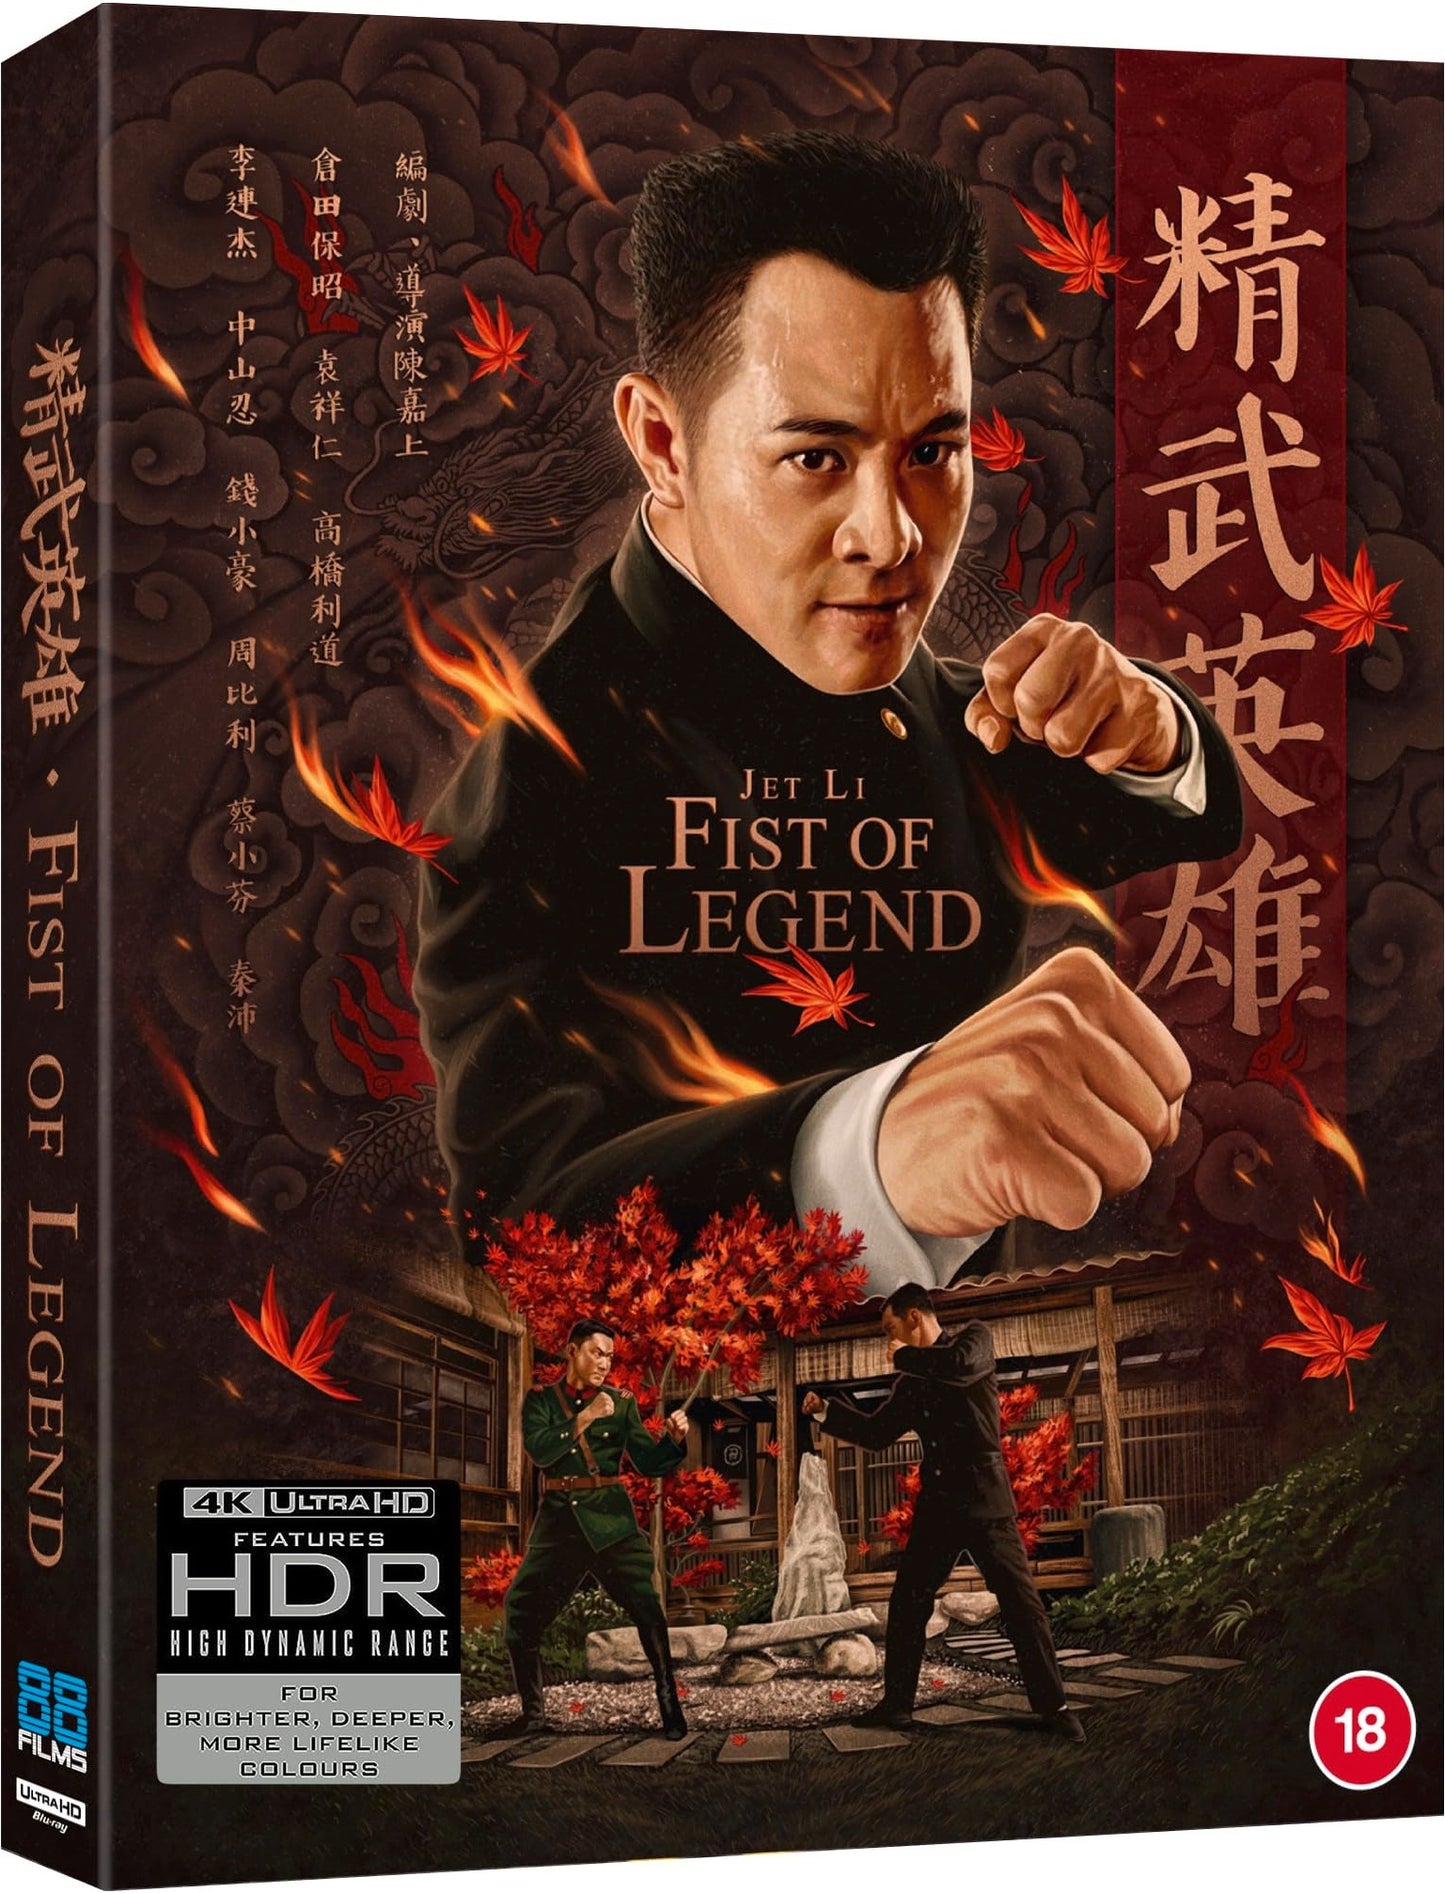 Fist of Legend [4K UHD] [UK]